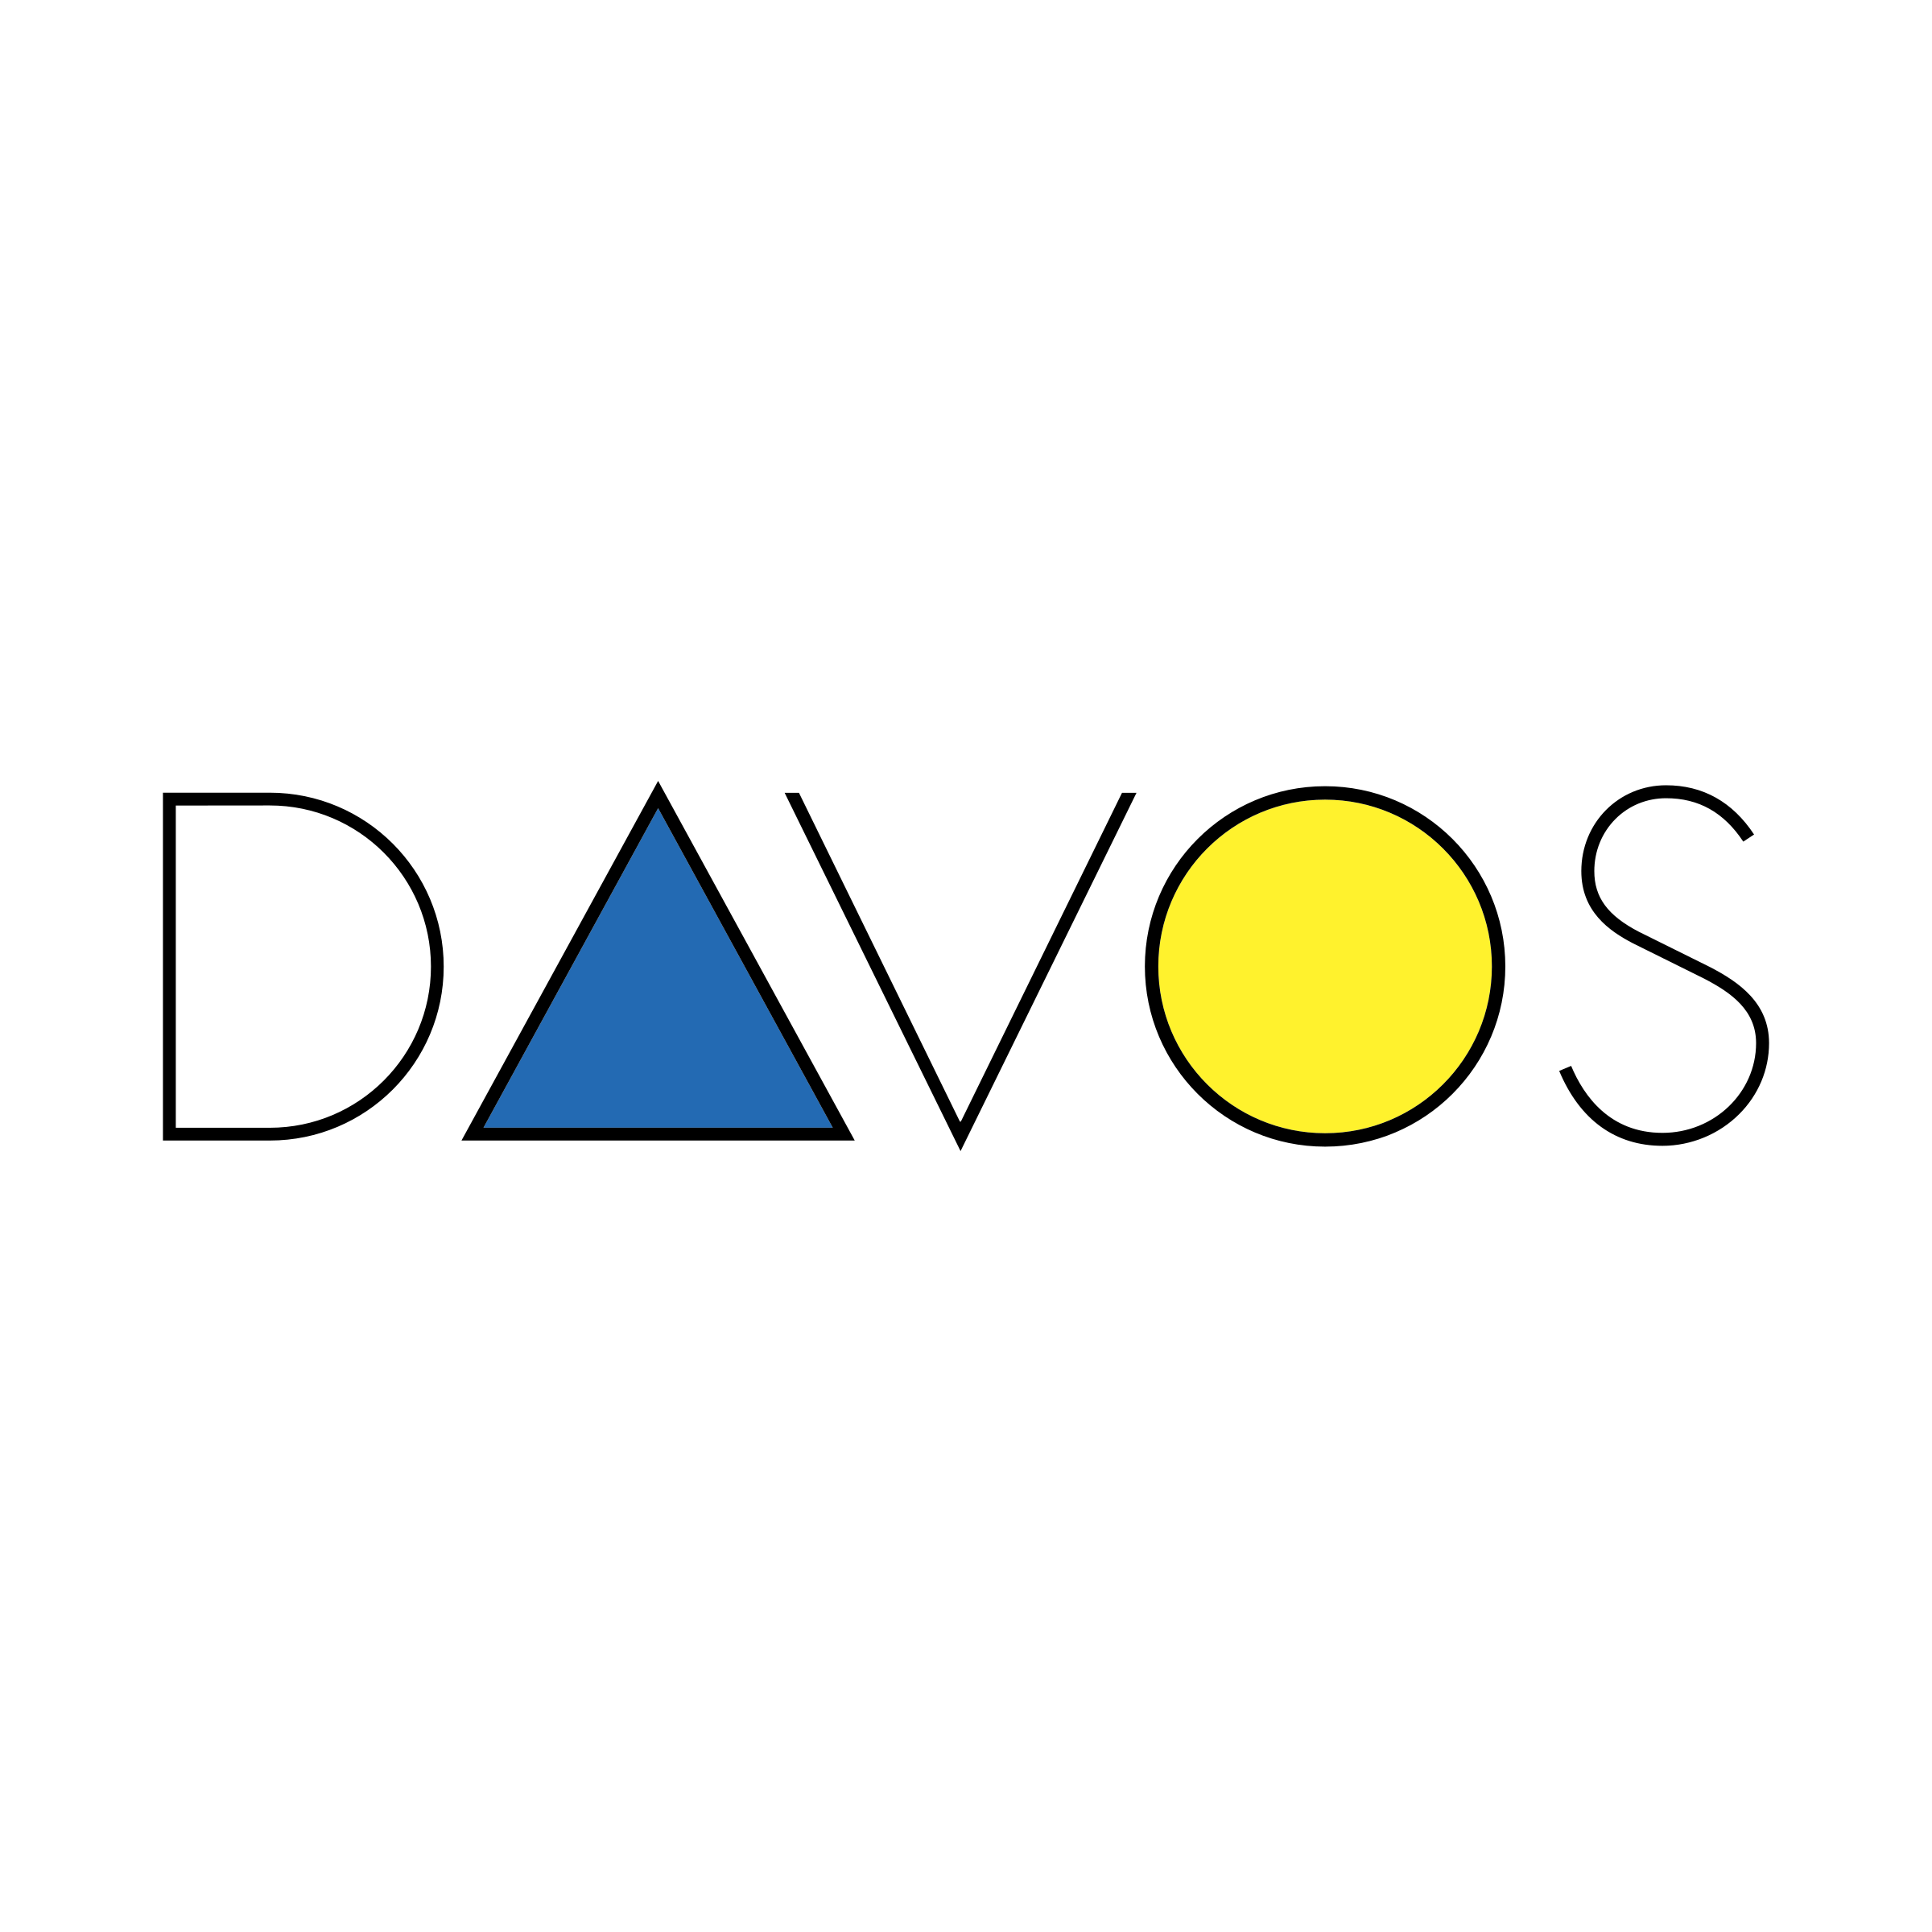 Davos Logo - Davos Logo PNG Transparent & SVG Vector - Freebie Supply